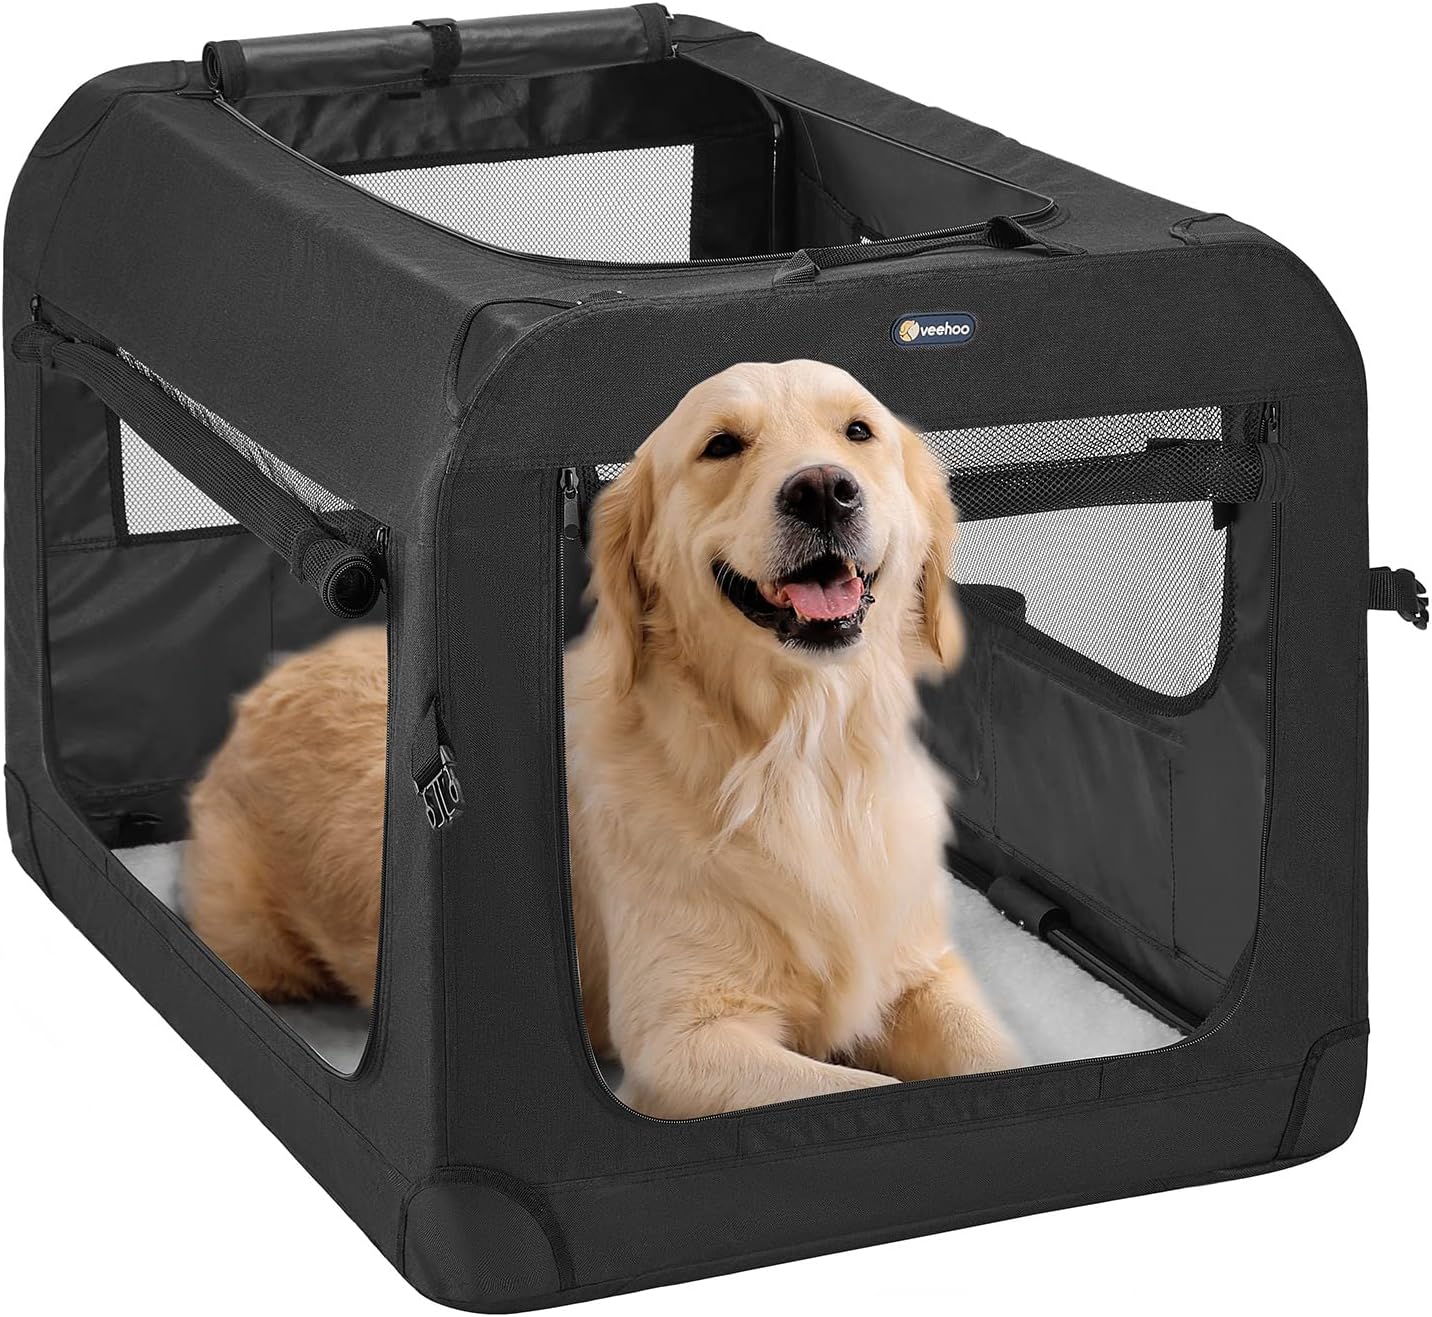 Veehoo Folding Soft Dog Crate, 3-Door Pet Kennel, 36", Black - $65